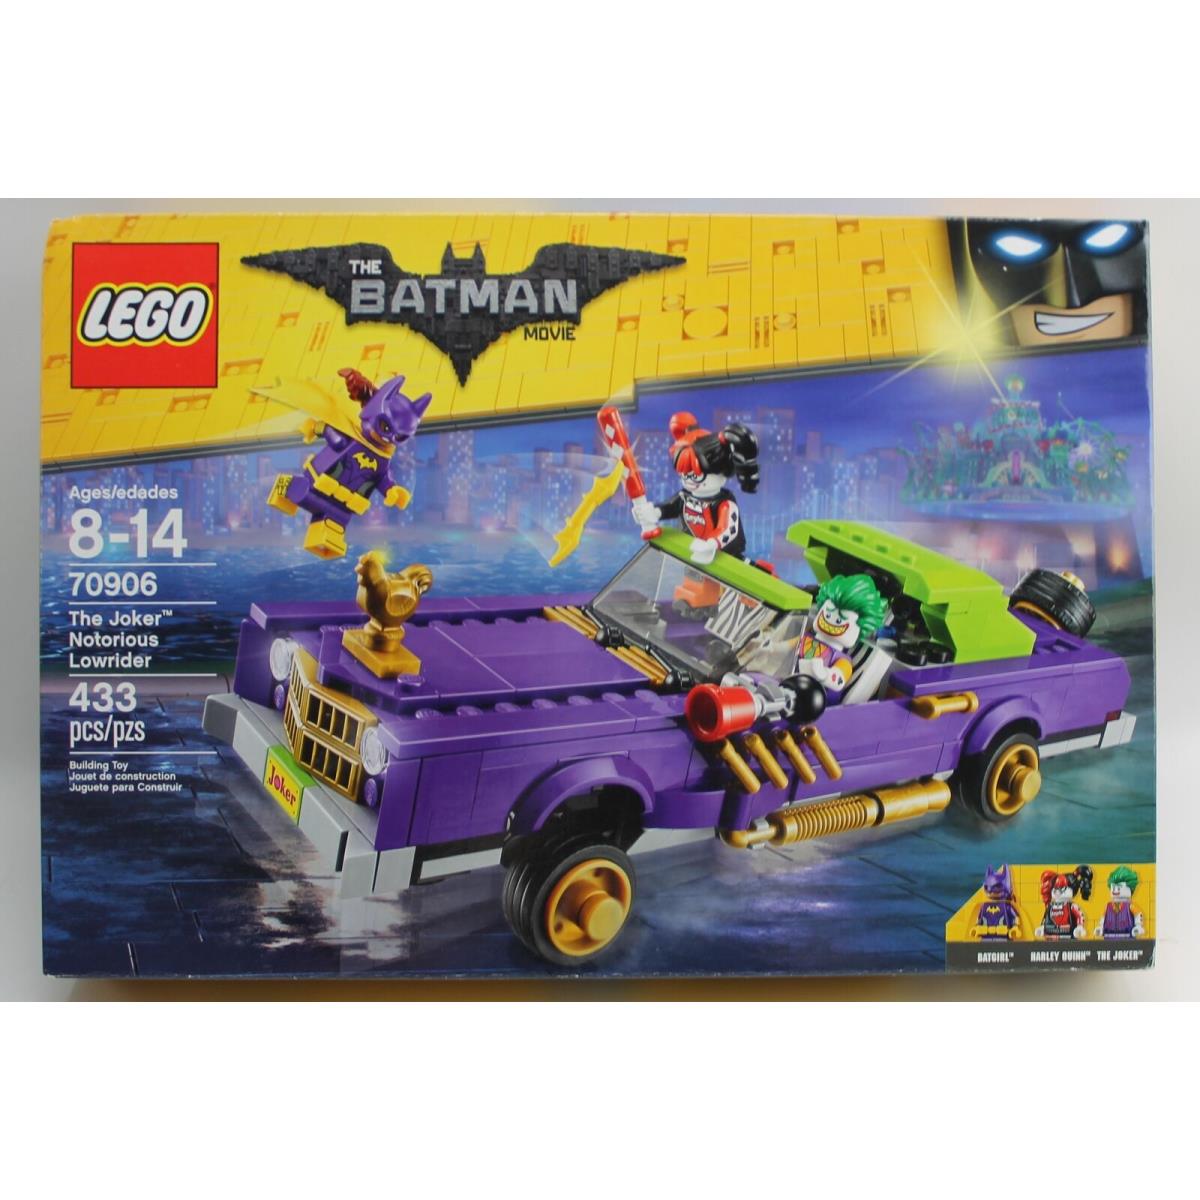 Lego The Batman Movie The Joker Notorious Lowrider Set 70906